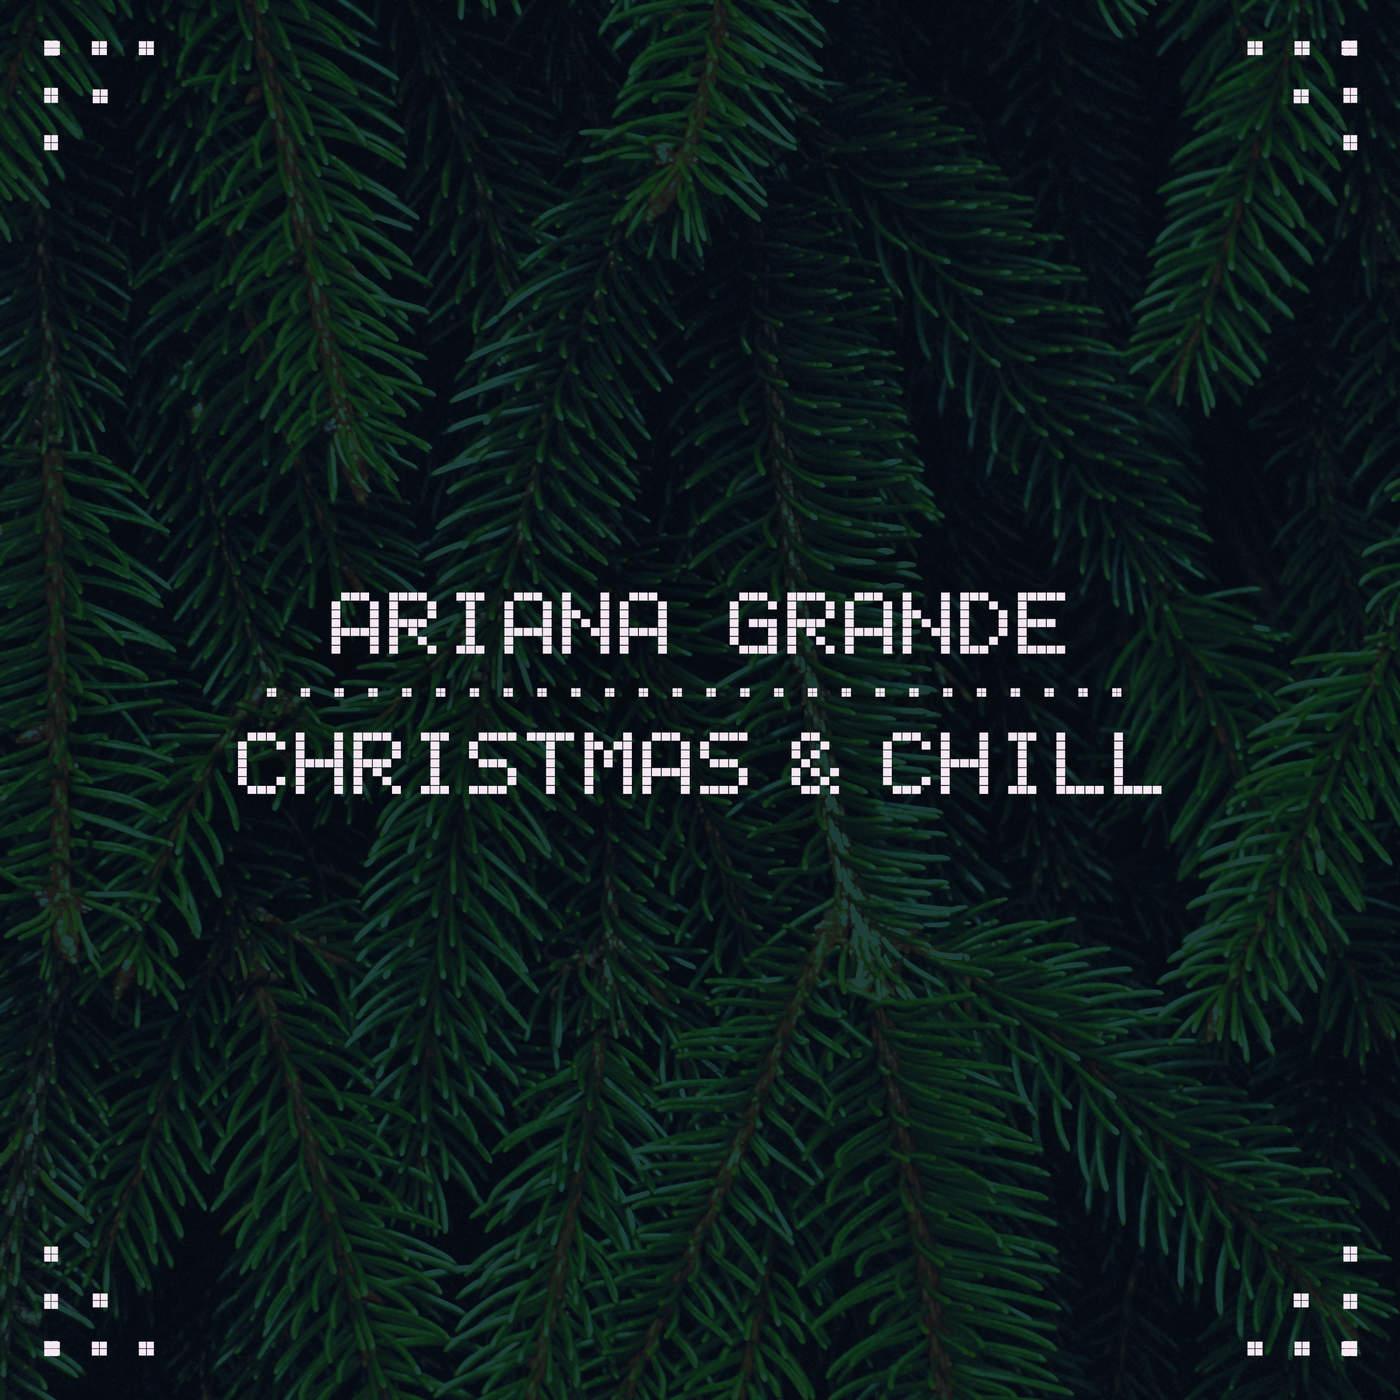 Christmas & Chill (EP)